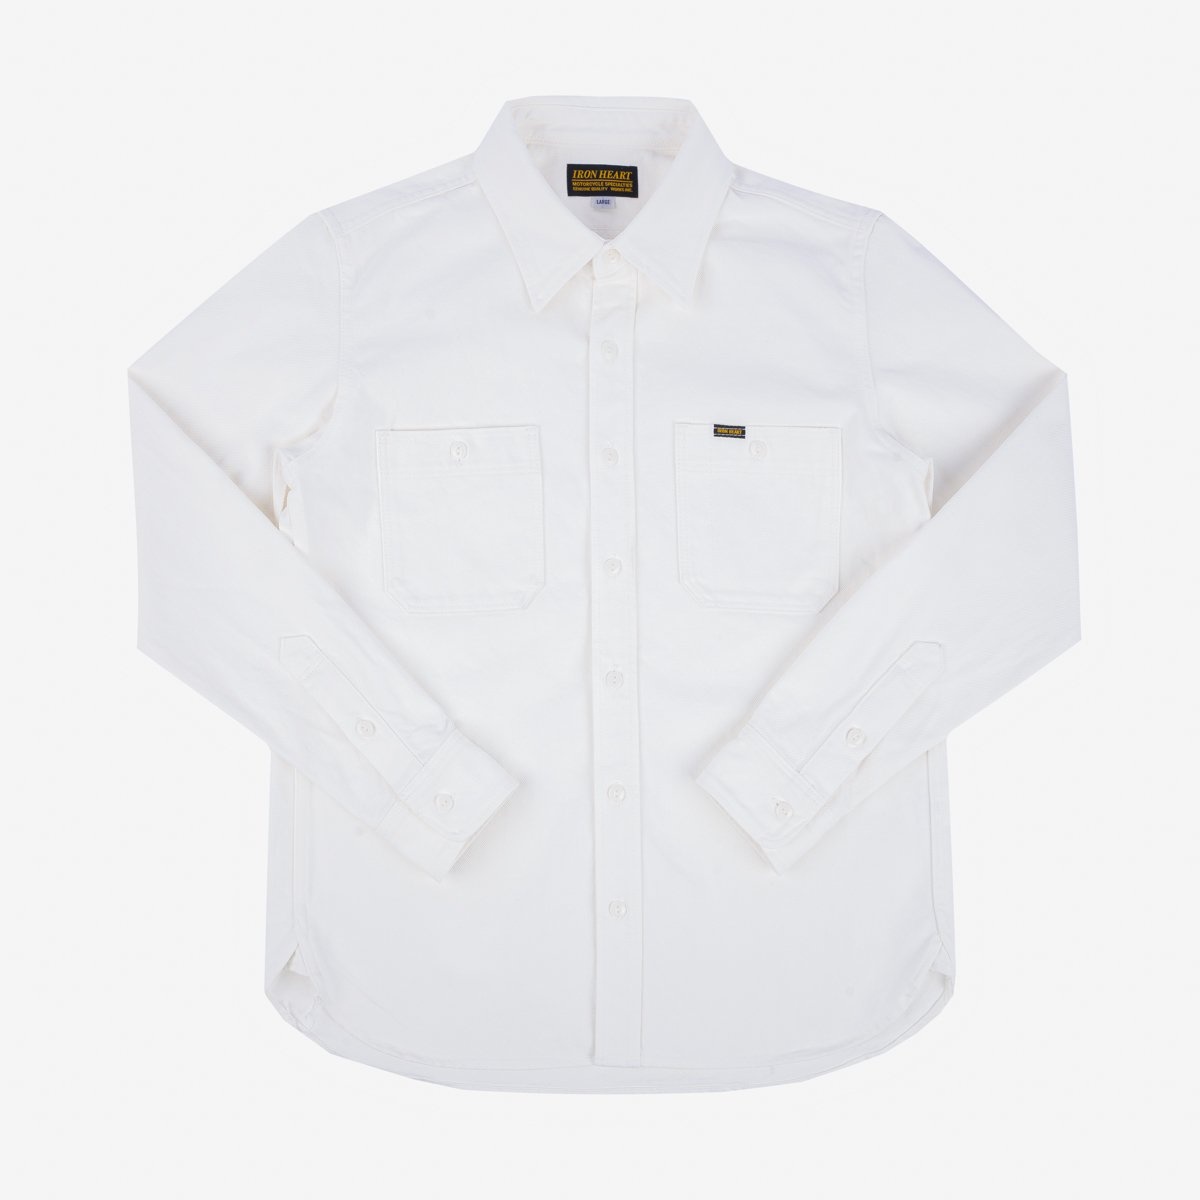 IHSH-391-WHT 13.5oz Denim Work Shirt - White - 1